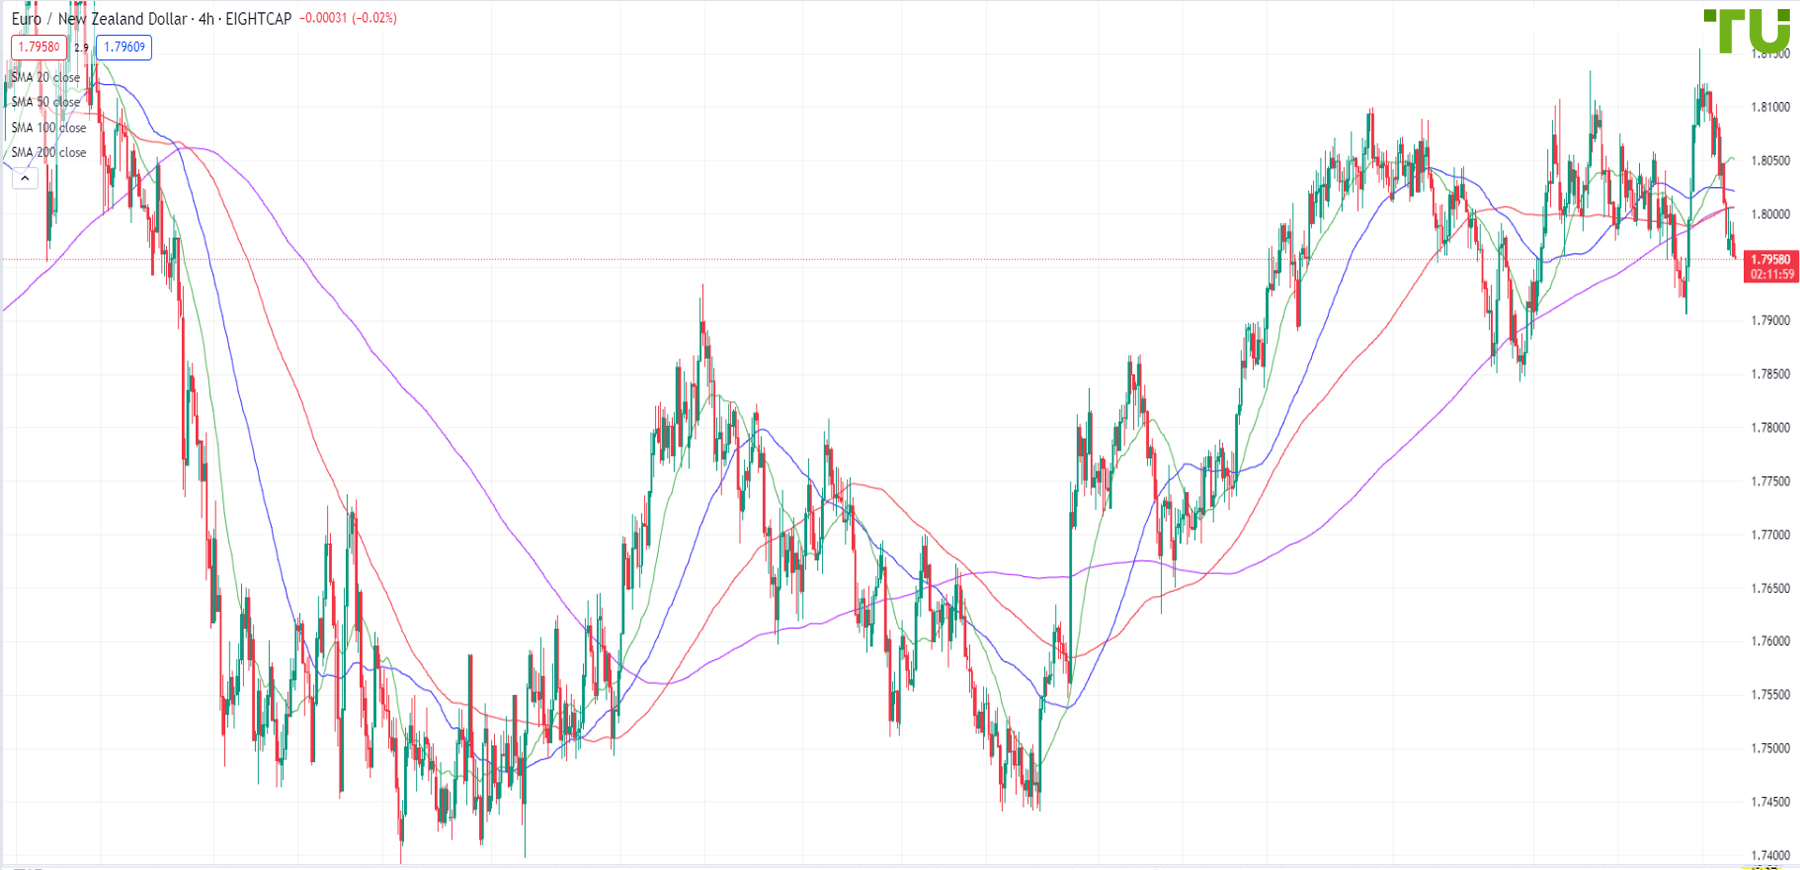 EUR/NZD is under steady selling pressure